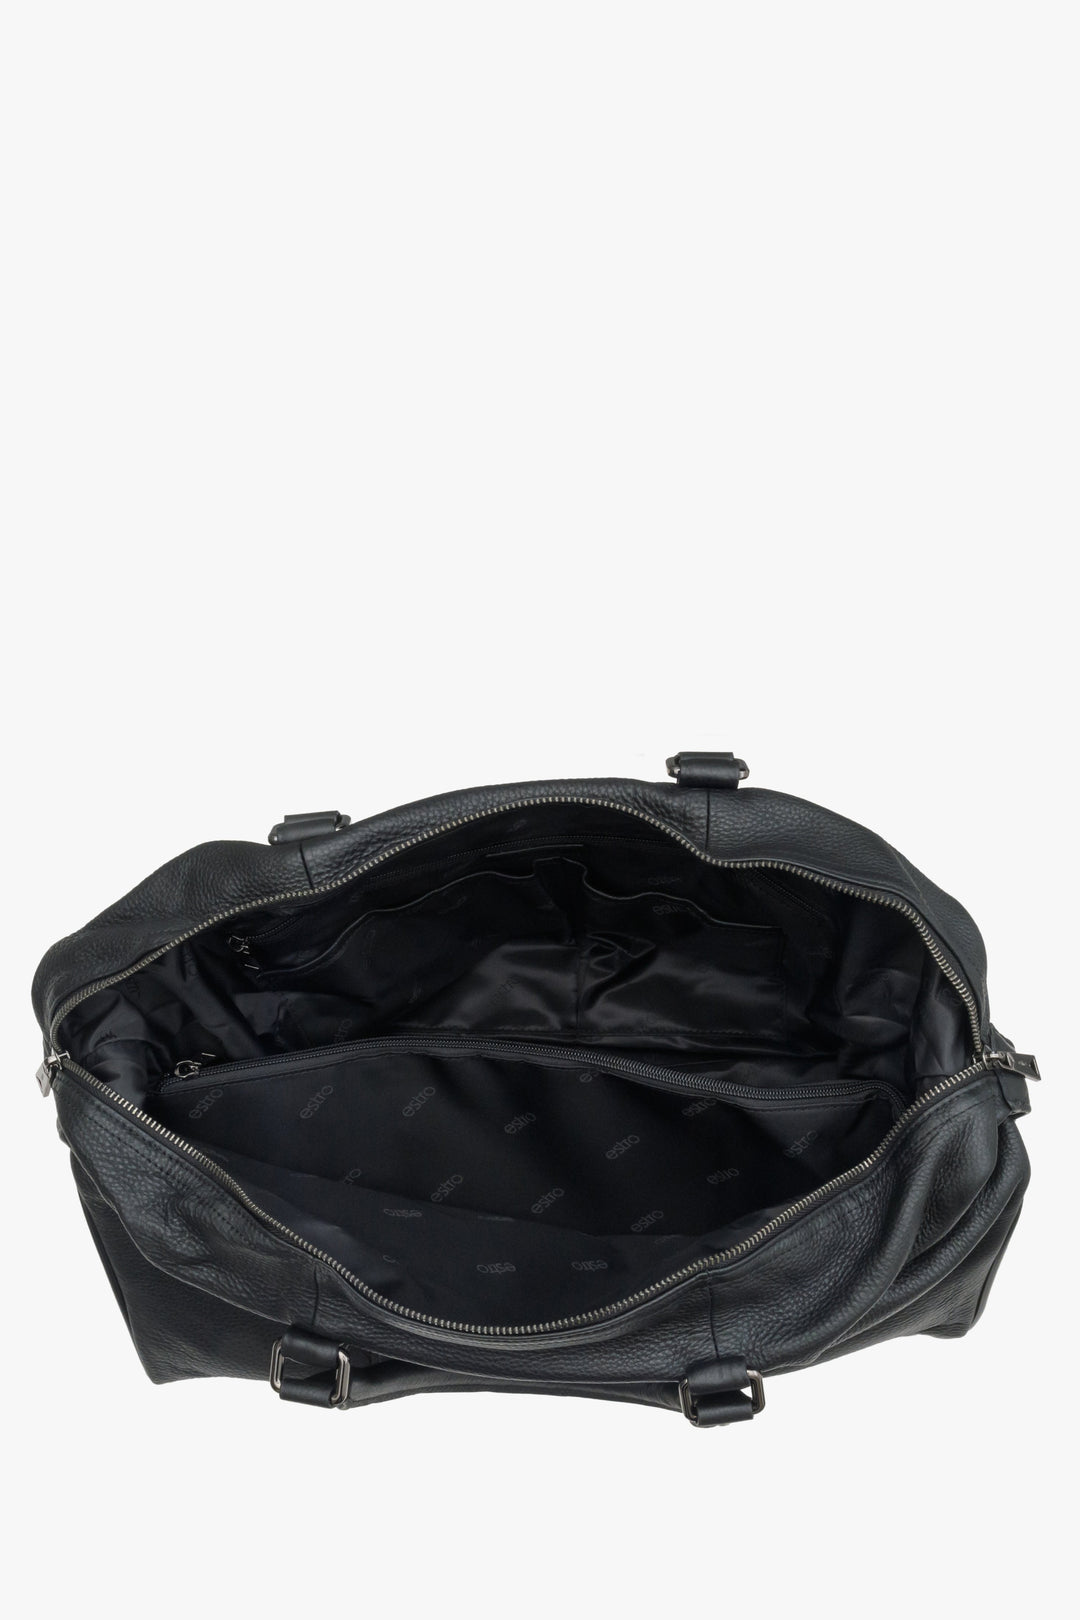 Men's interior of the black leather travel bag by Estro.